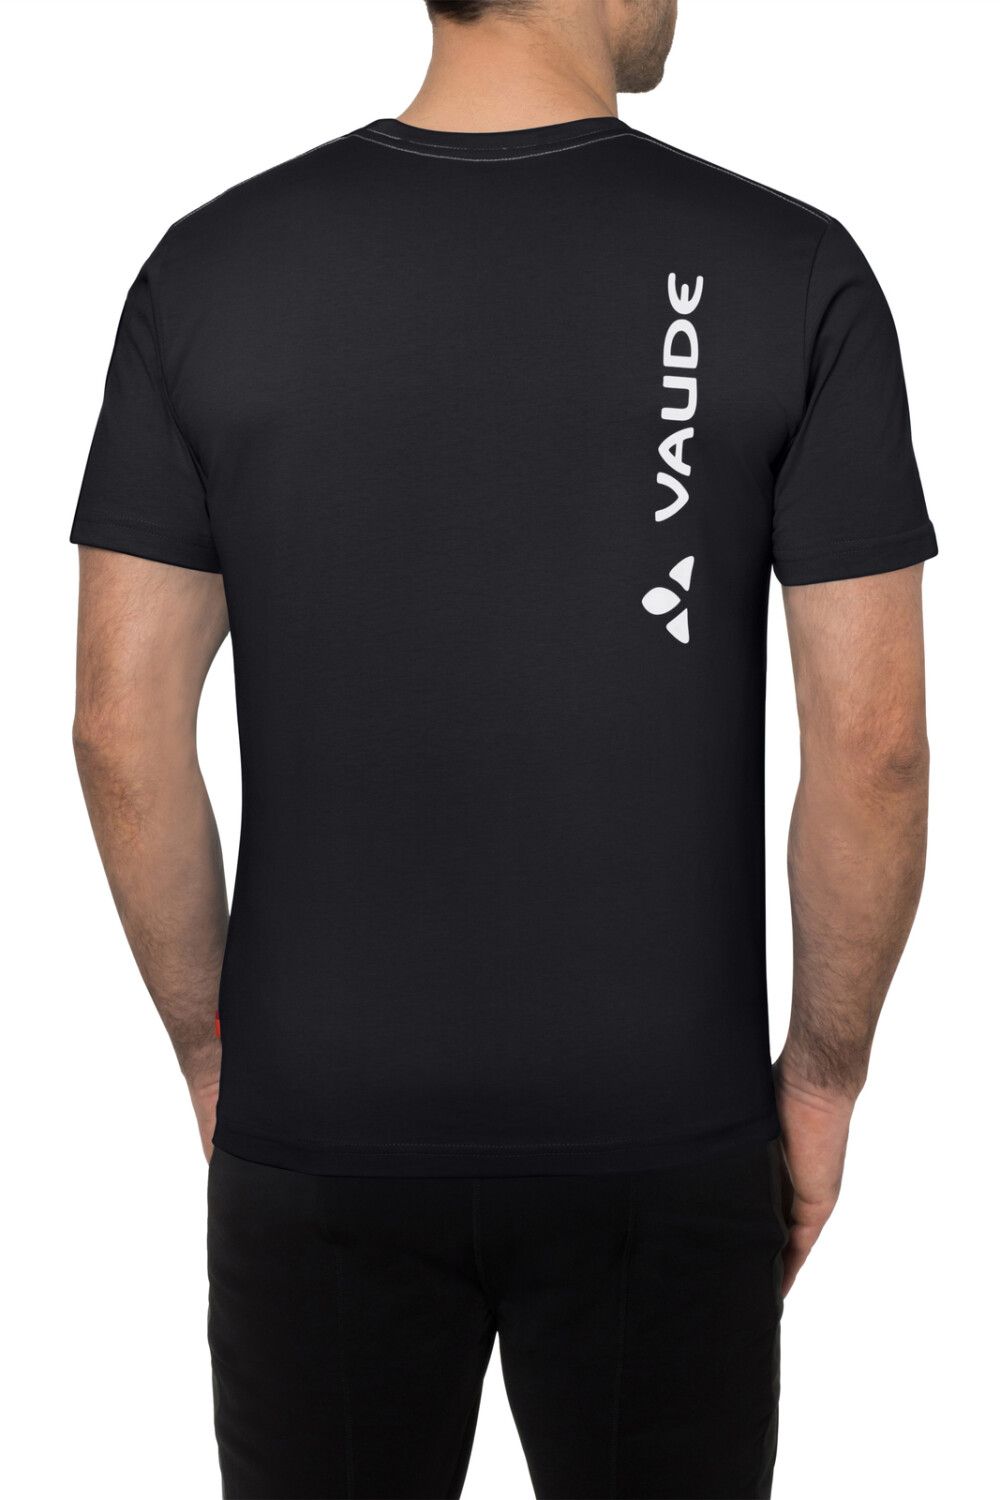 VAUDE Men's Brand T-Shirt (Bild 17)